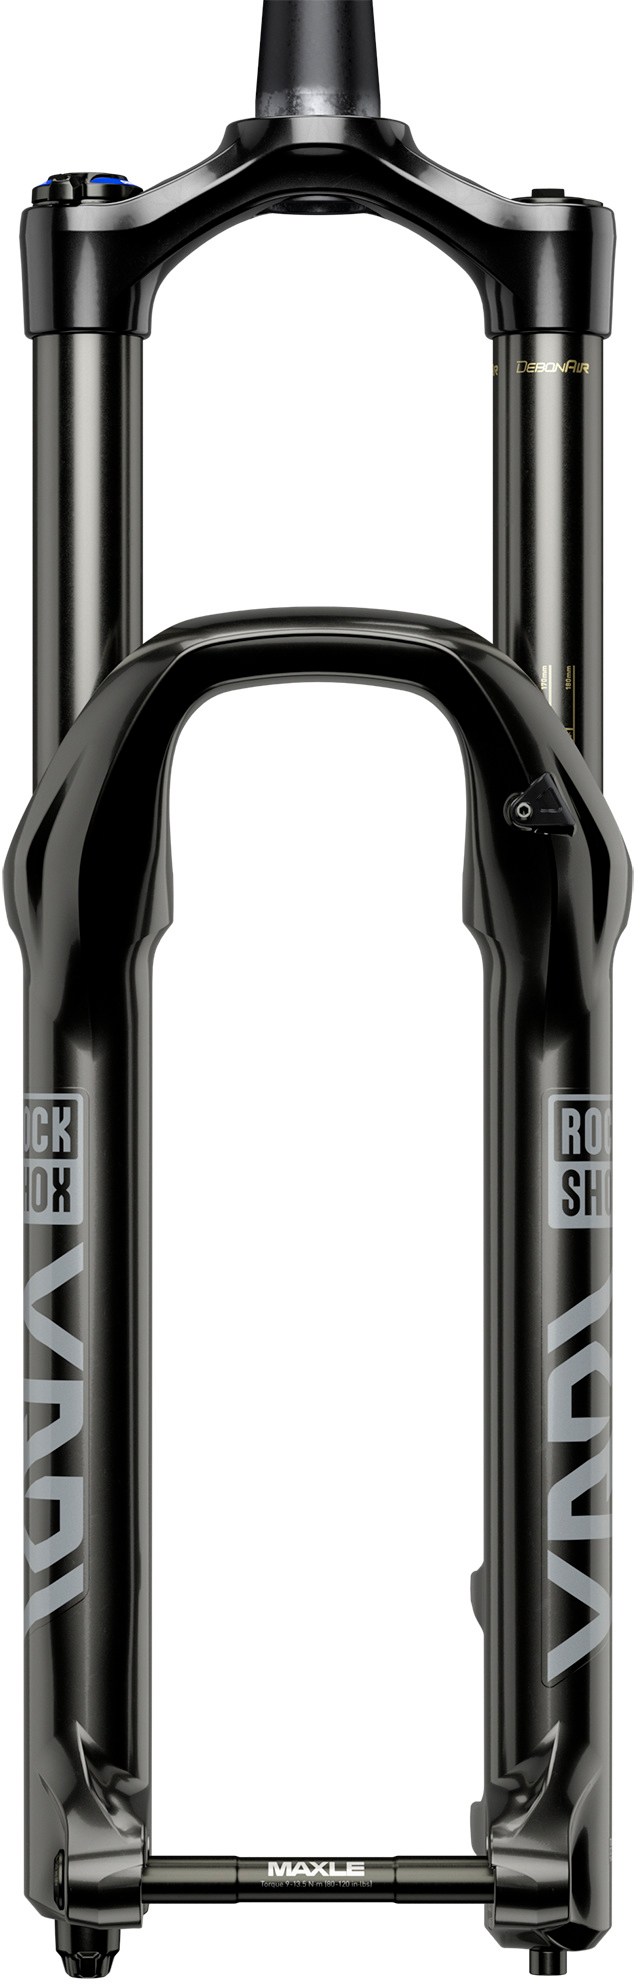 Амортизационная вилка Yari RC RockShox, черный rockshox revelation наклейки для велосипеда на вилку mtb stickers